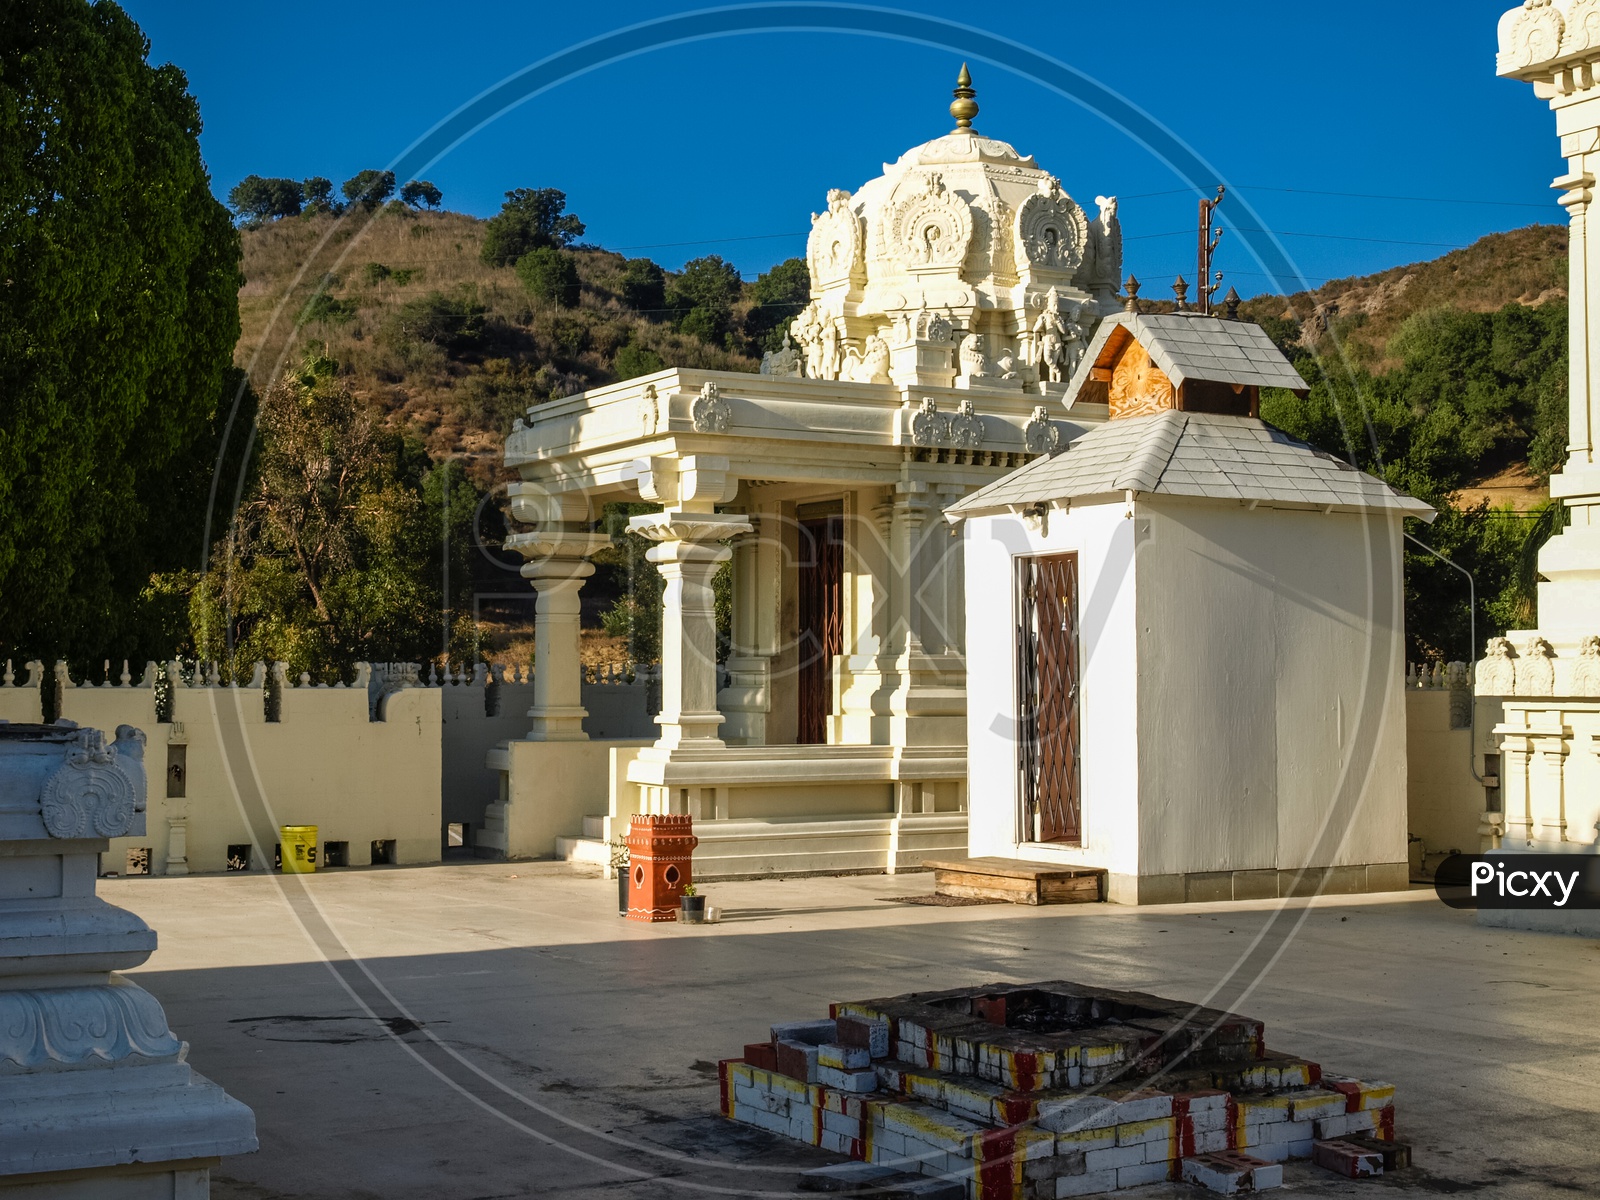 Malibu Hindu temple on the hills, California, USA